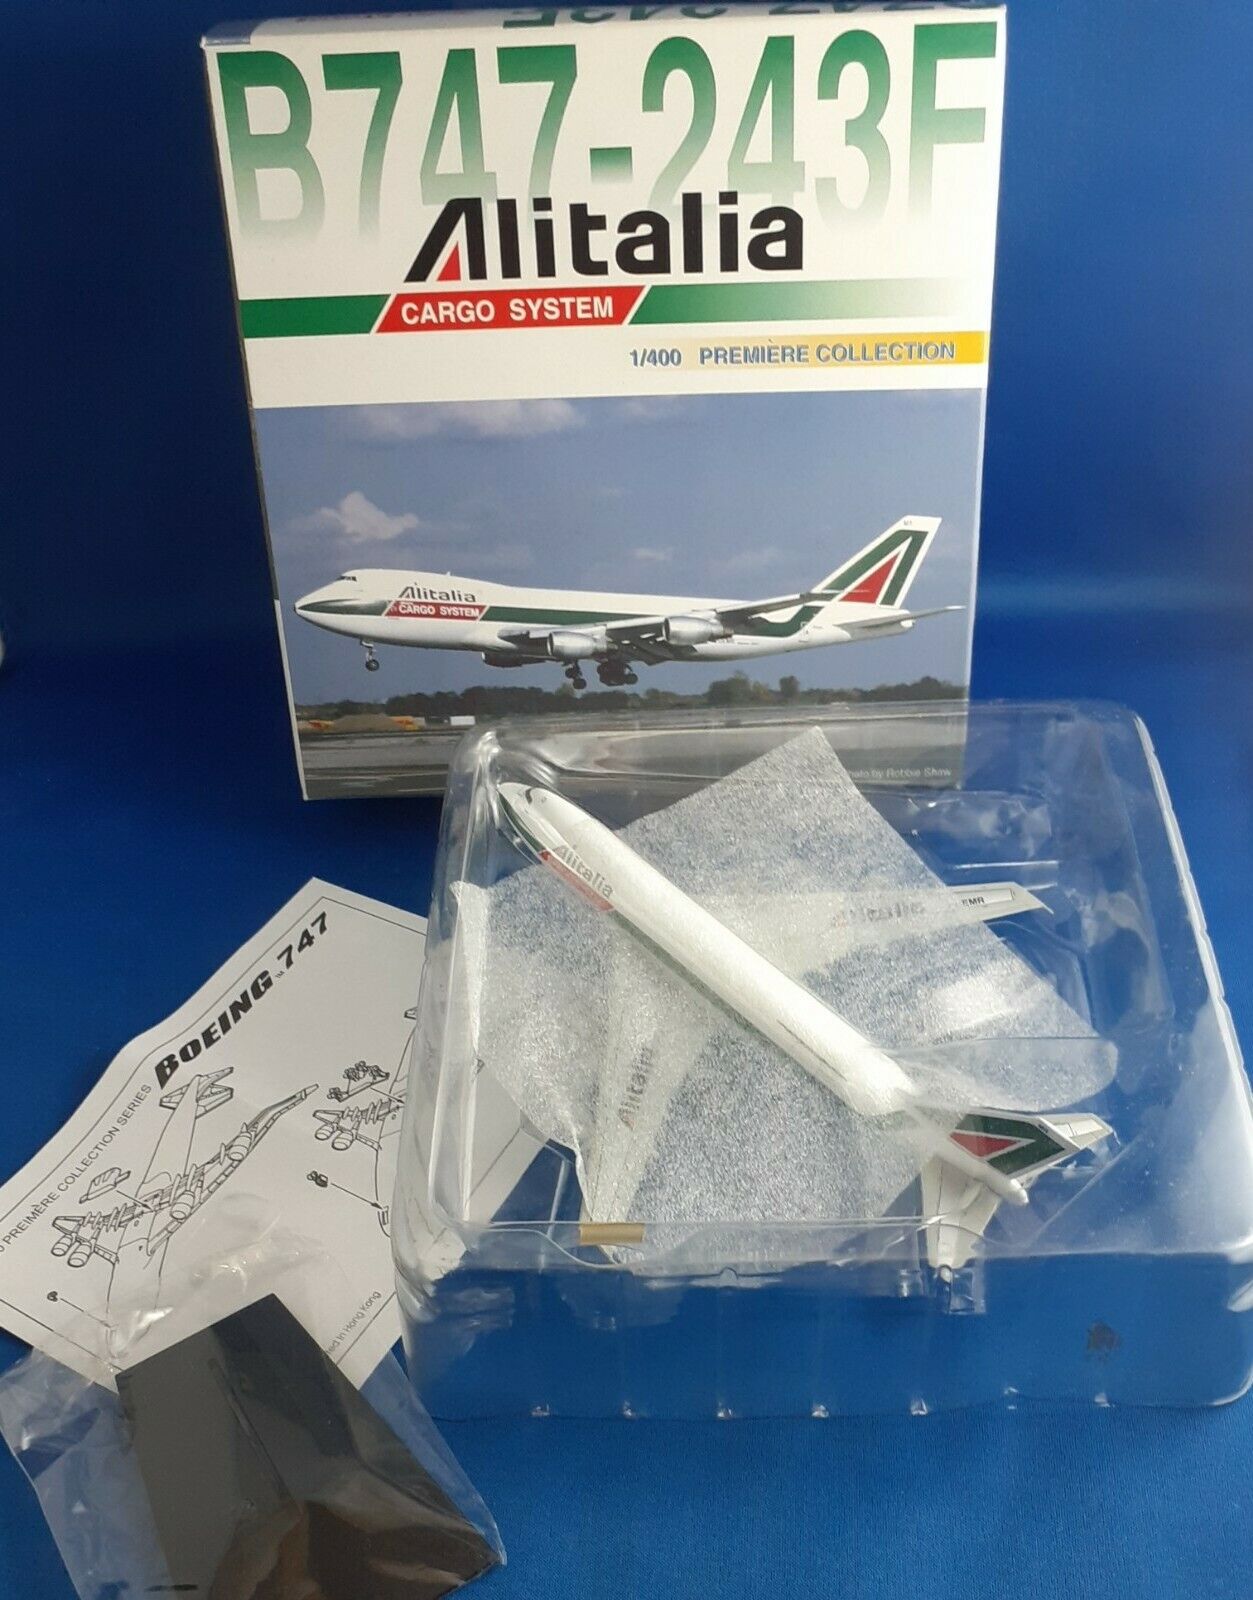 Alitalia B747-243F Boeing 747 1/400 Scale Diecast Airplane DRAGON WINGS No 55111